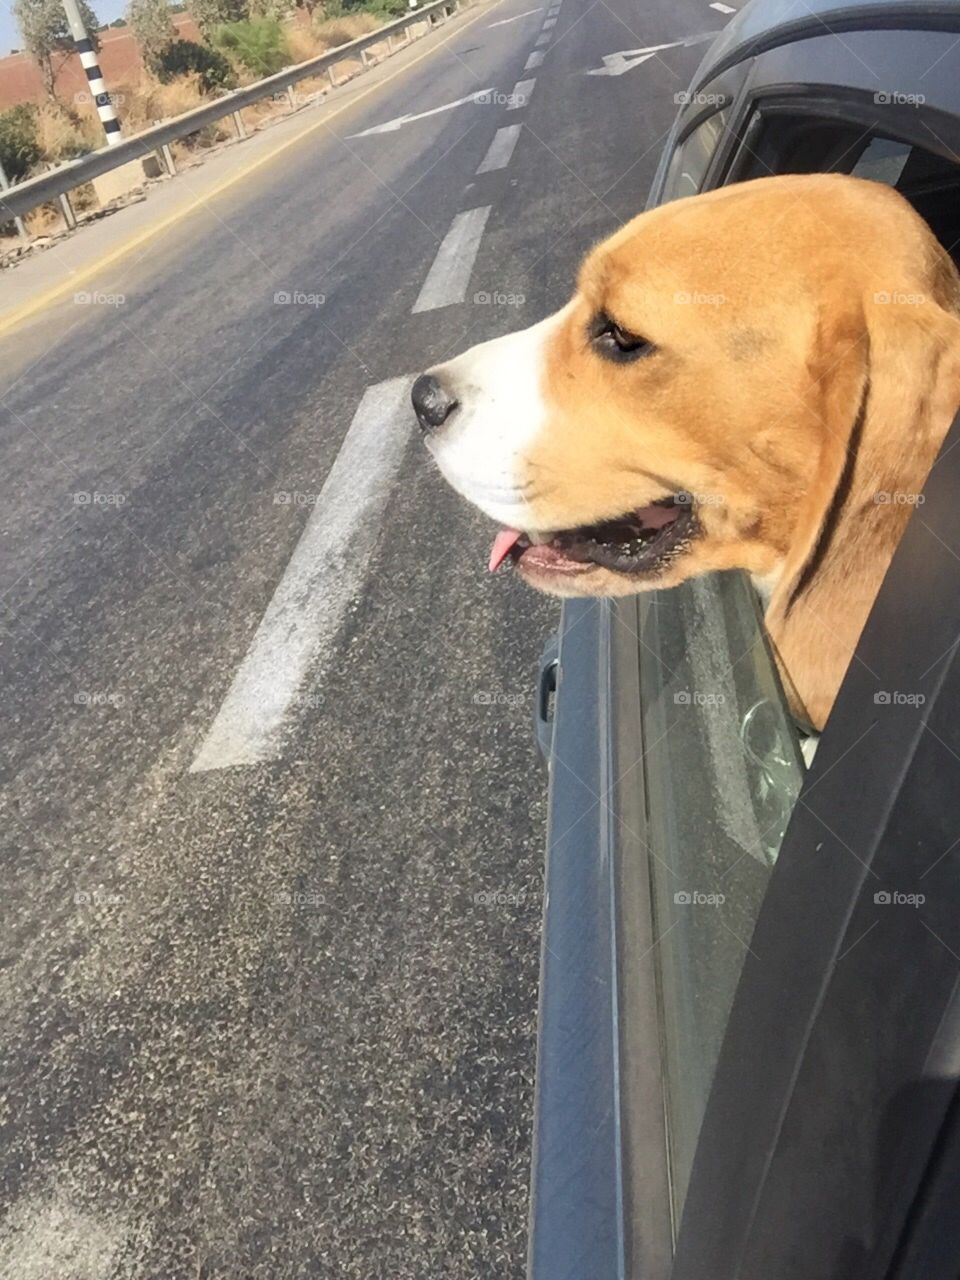 Best driving buddy